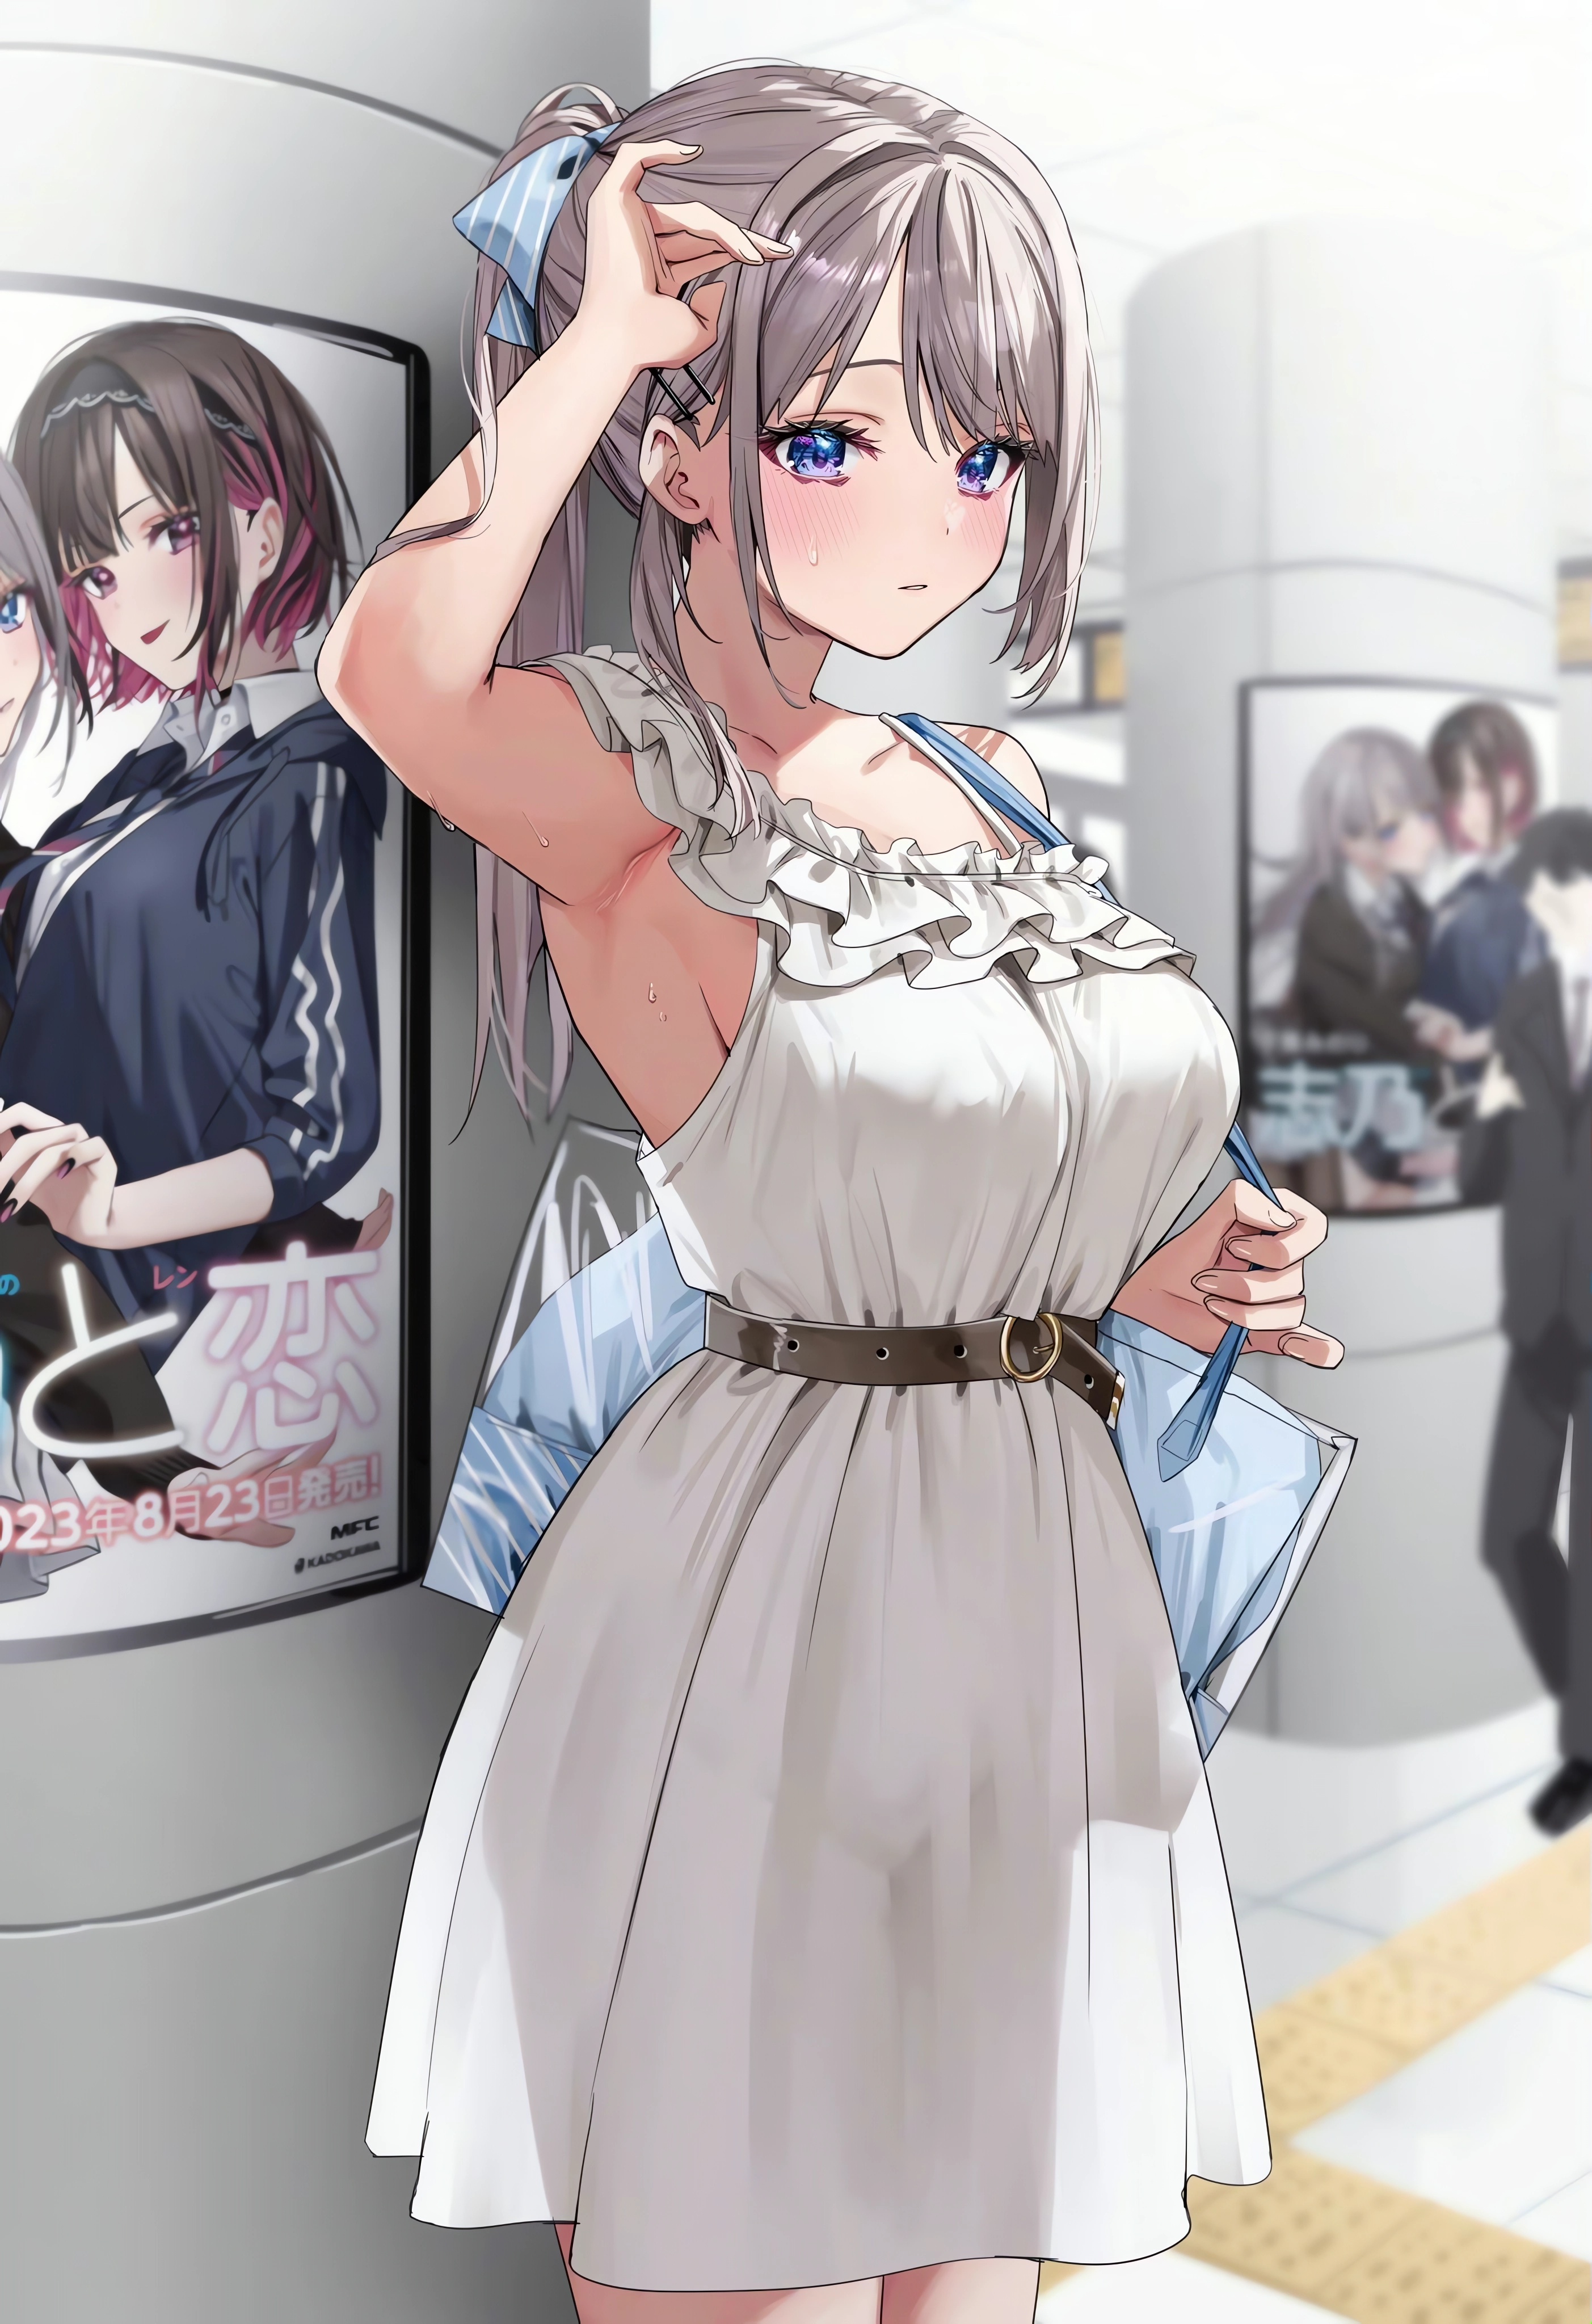 Anime Anime Girls Portrait Display Standing Japanese Looking At Viewer Purse Blushing Blue Eyes Armp 2806x4096